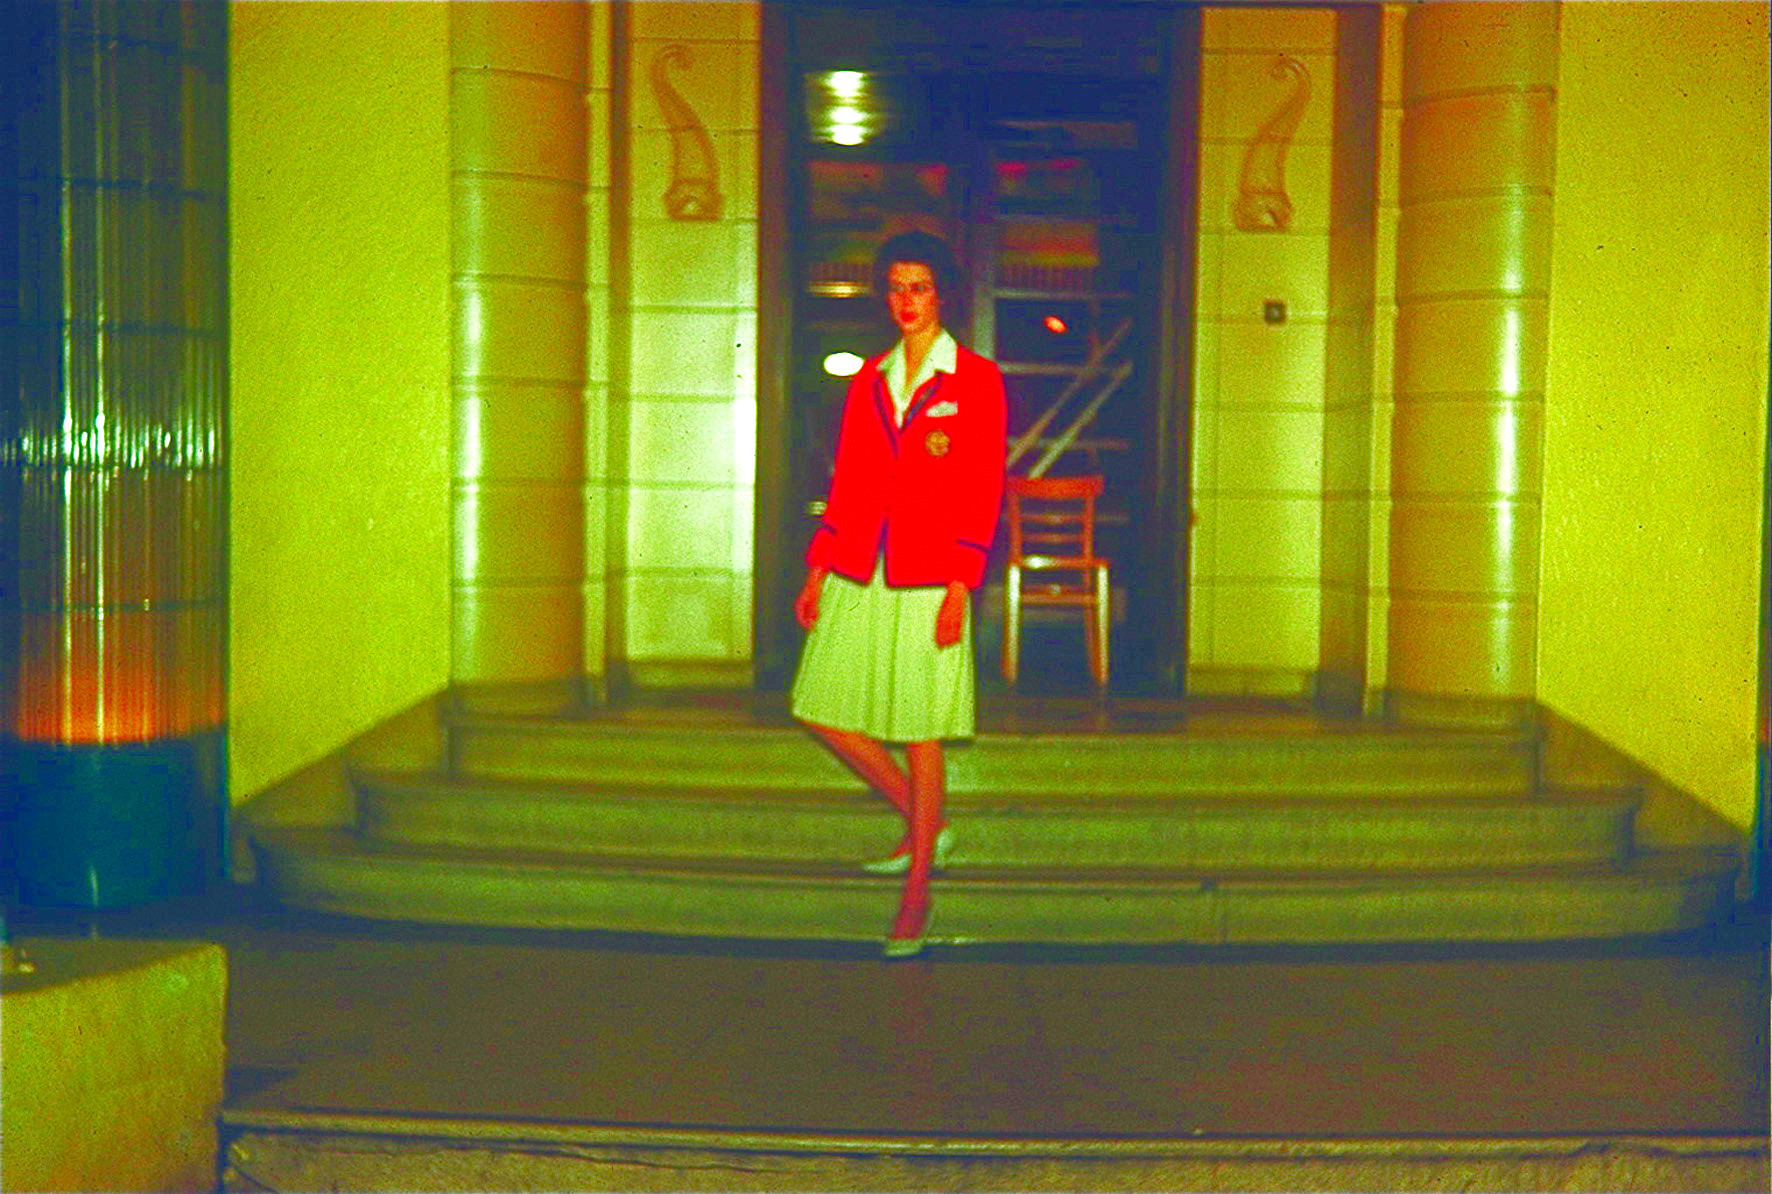 BUTLINS BRIGHTON 1960 Carol at Redcoats Reunited